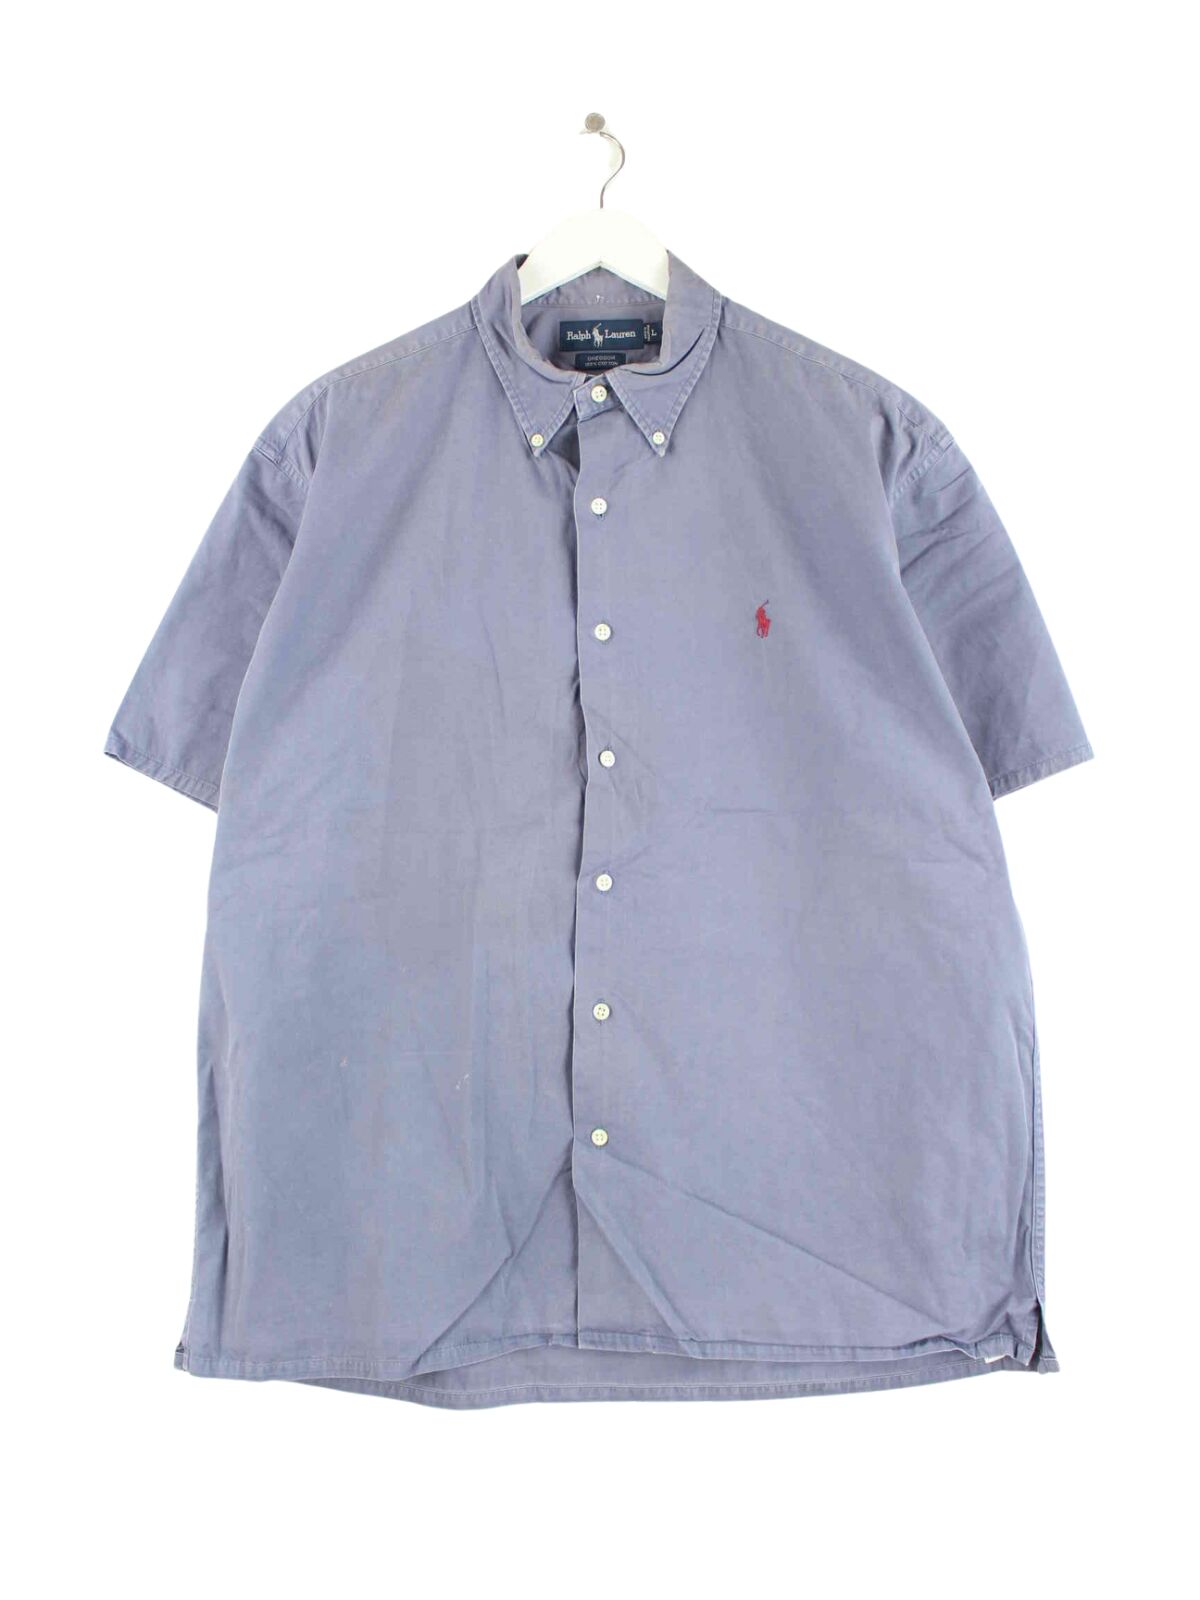 Ralph Lauren 90s Vintage Short Sleeve Hemd Blau L (front image)